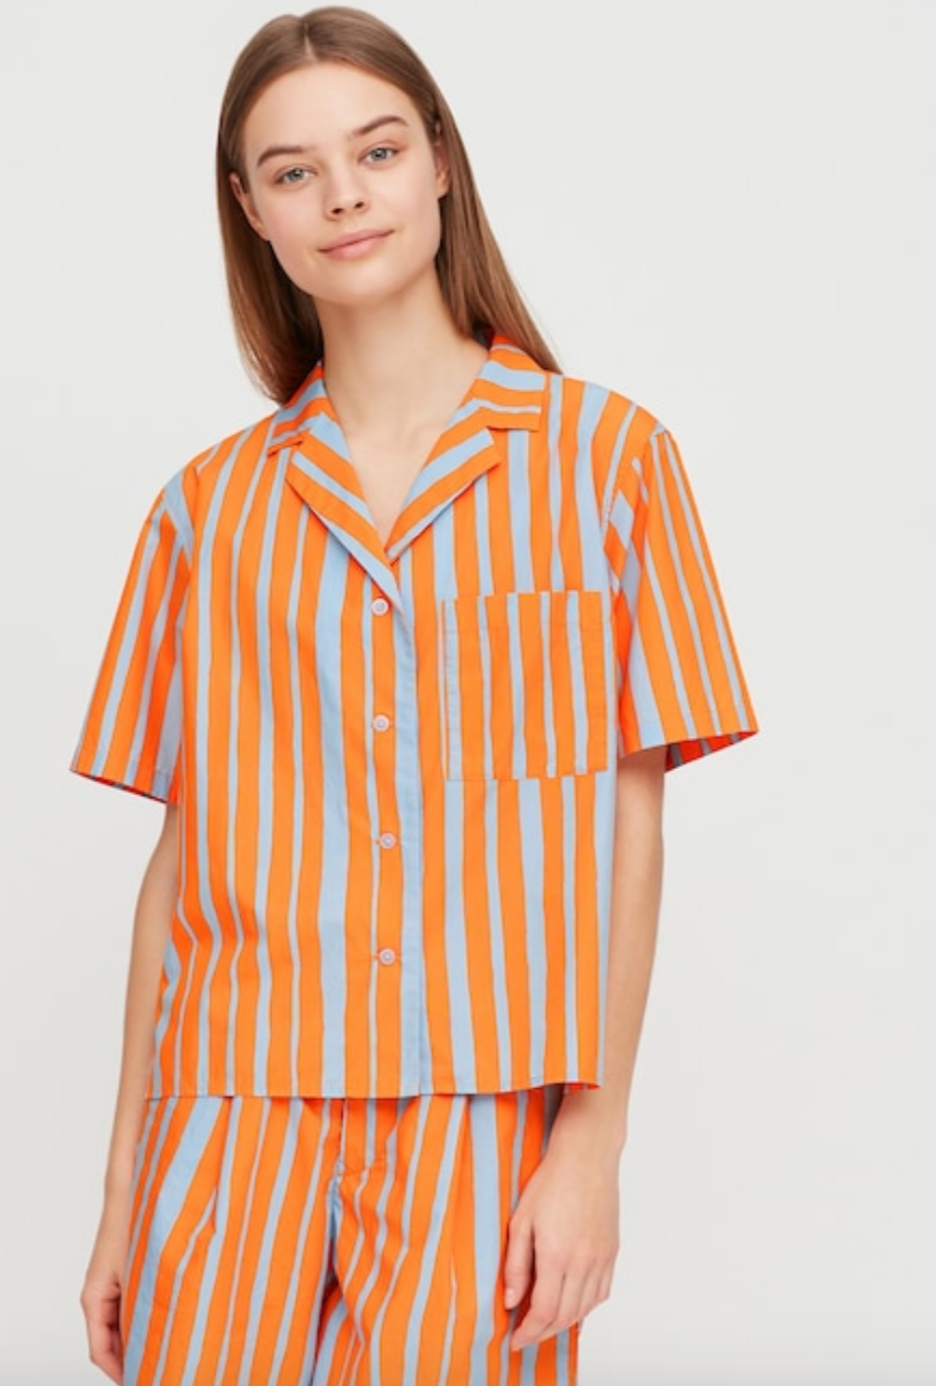 Uniqlo x Marimekko + Short-Sleeve Shirt